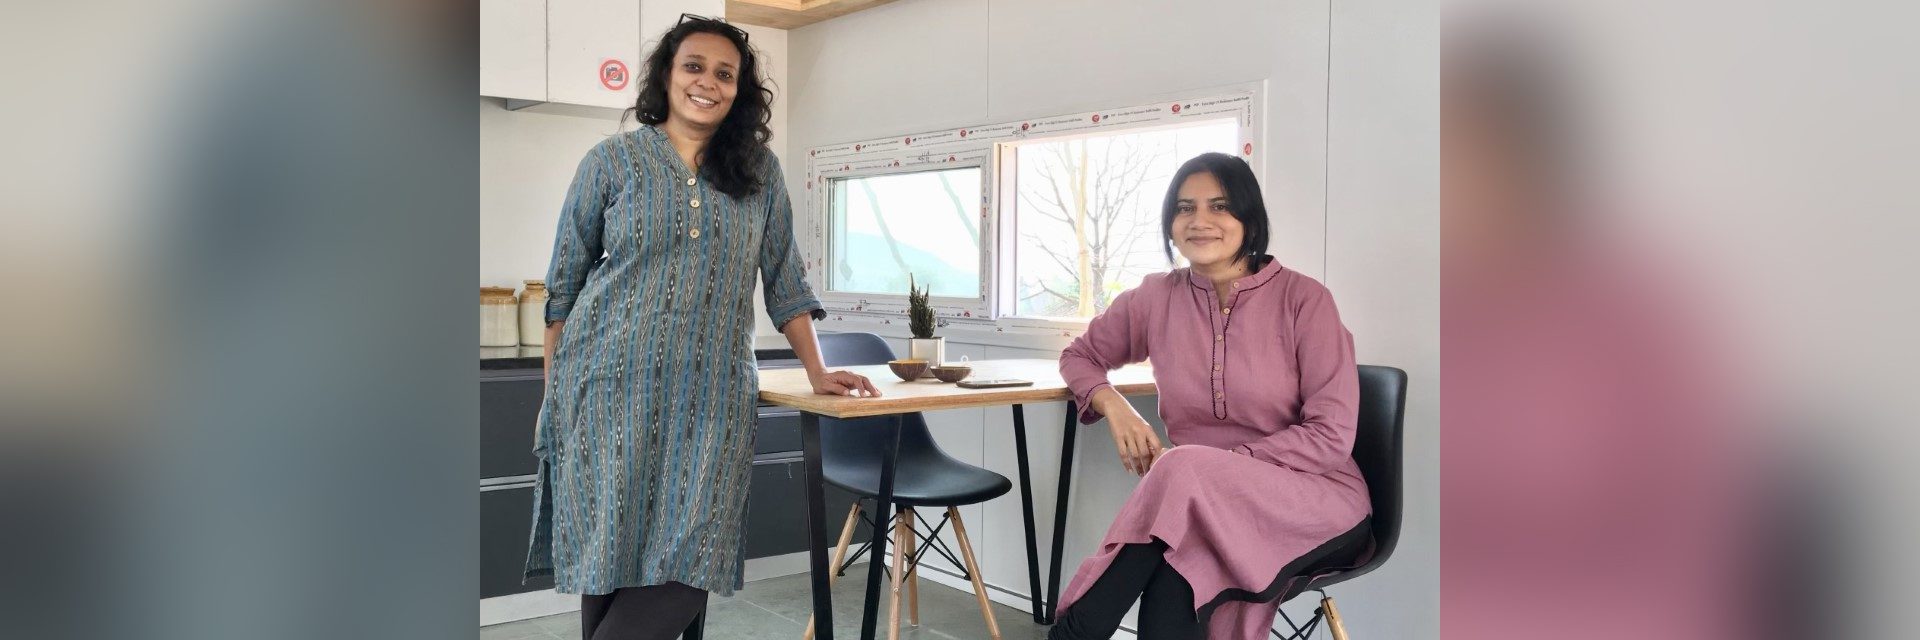 Gestalter | Dhara Kabaria und Sonali Phadke